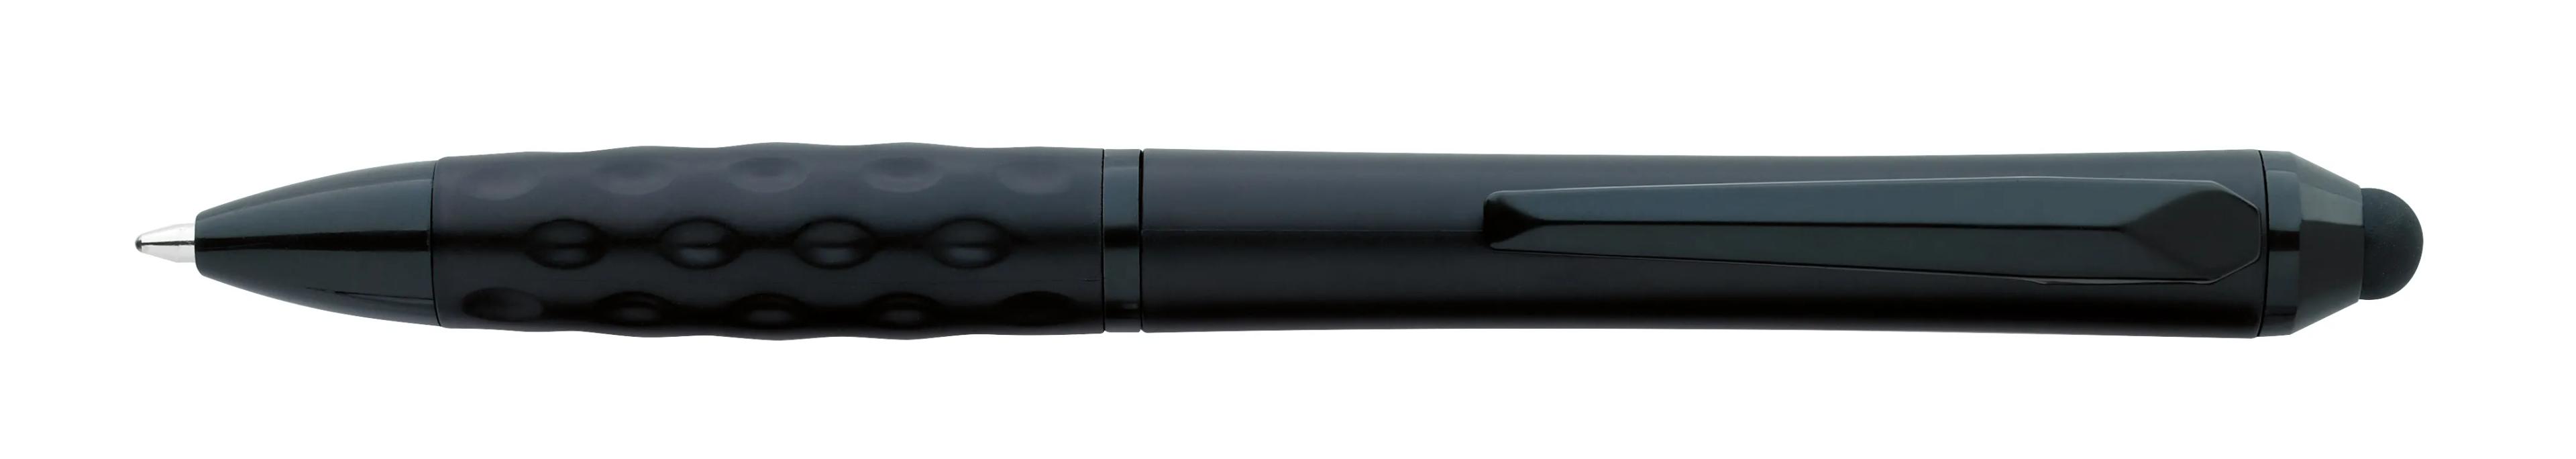 Tev Metallic Stylus Pen 3 of 77